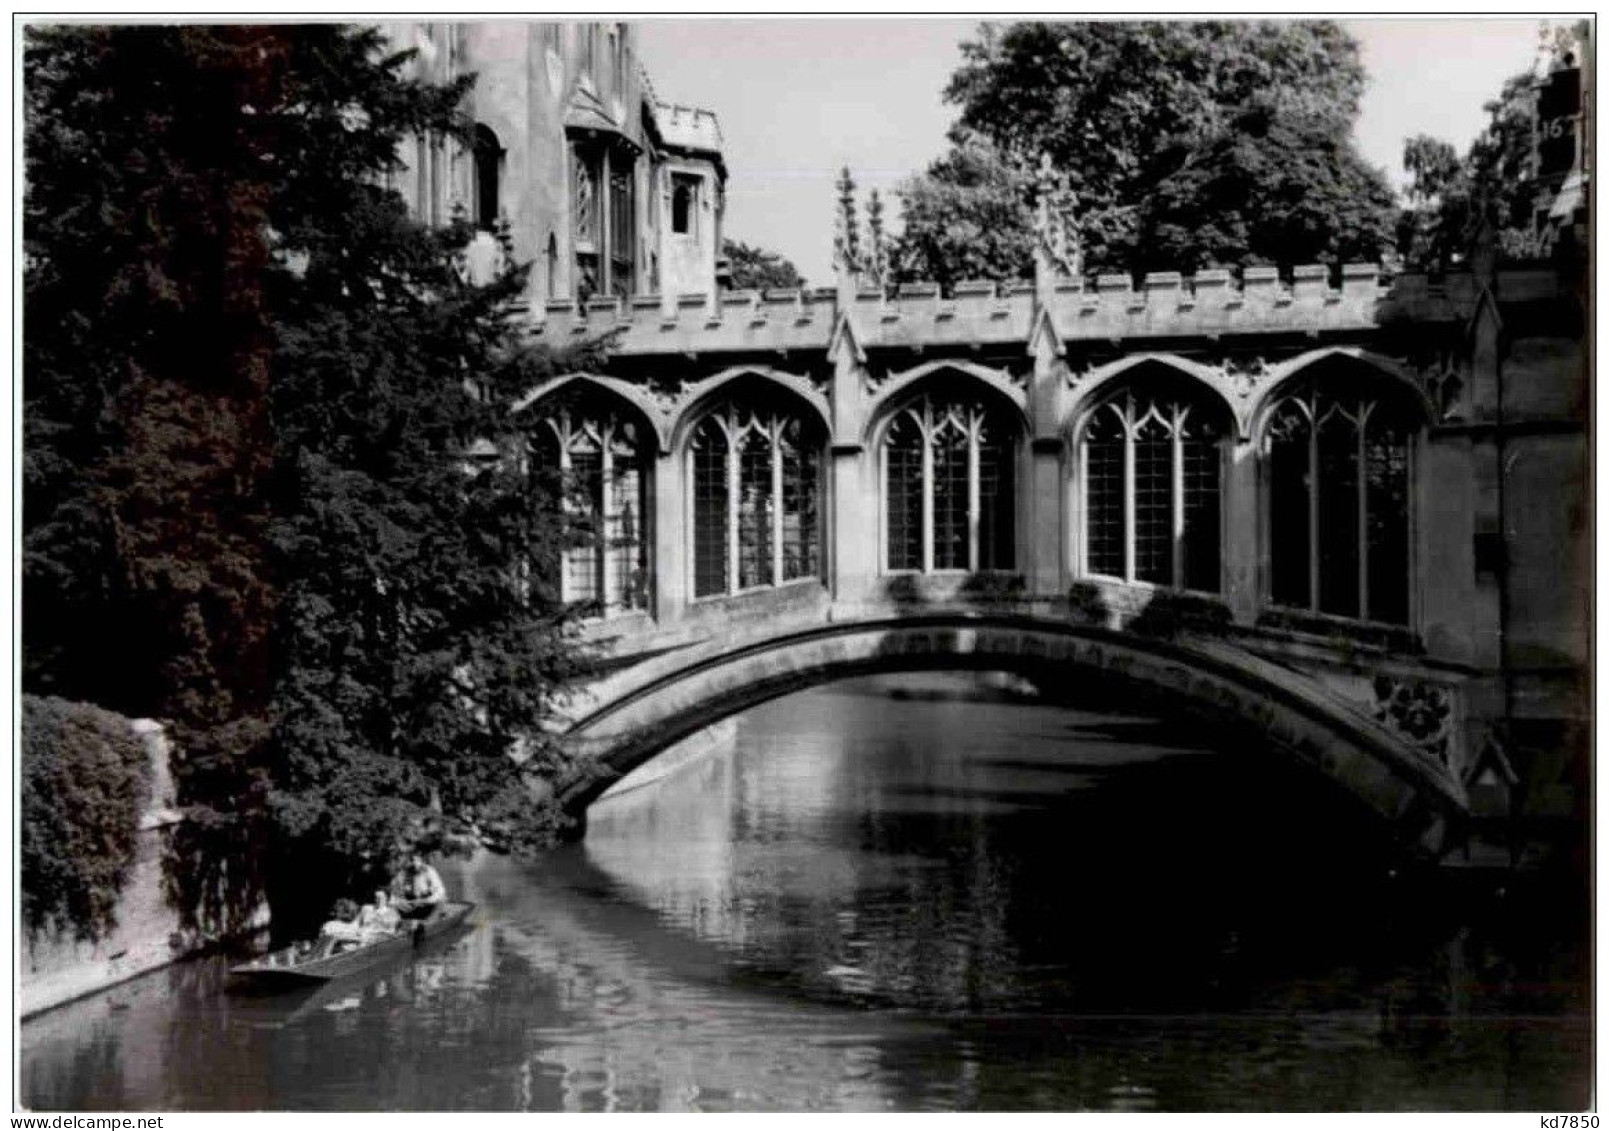 Cambridge 1953 - Cambridge